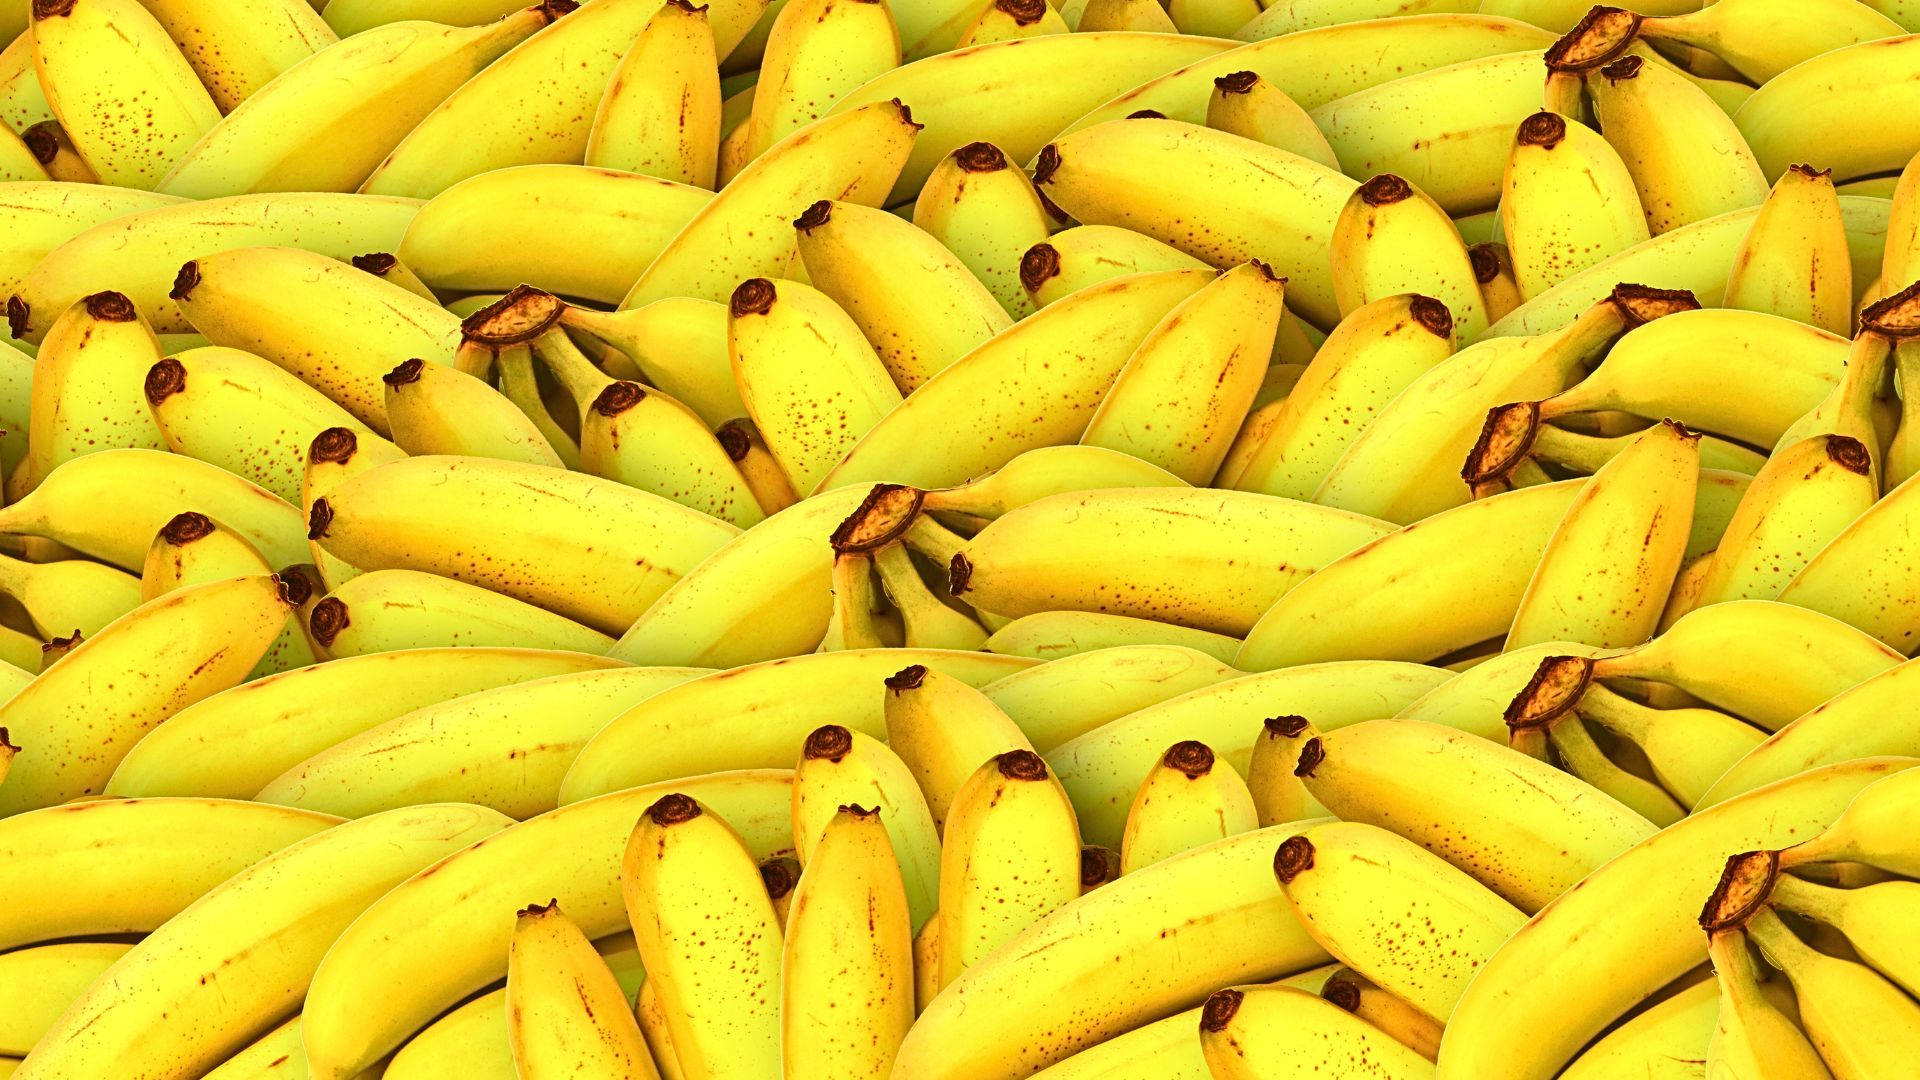 Banana logistics